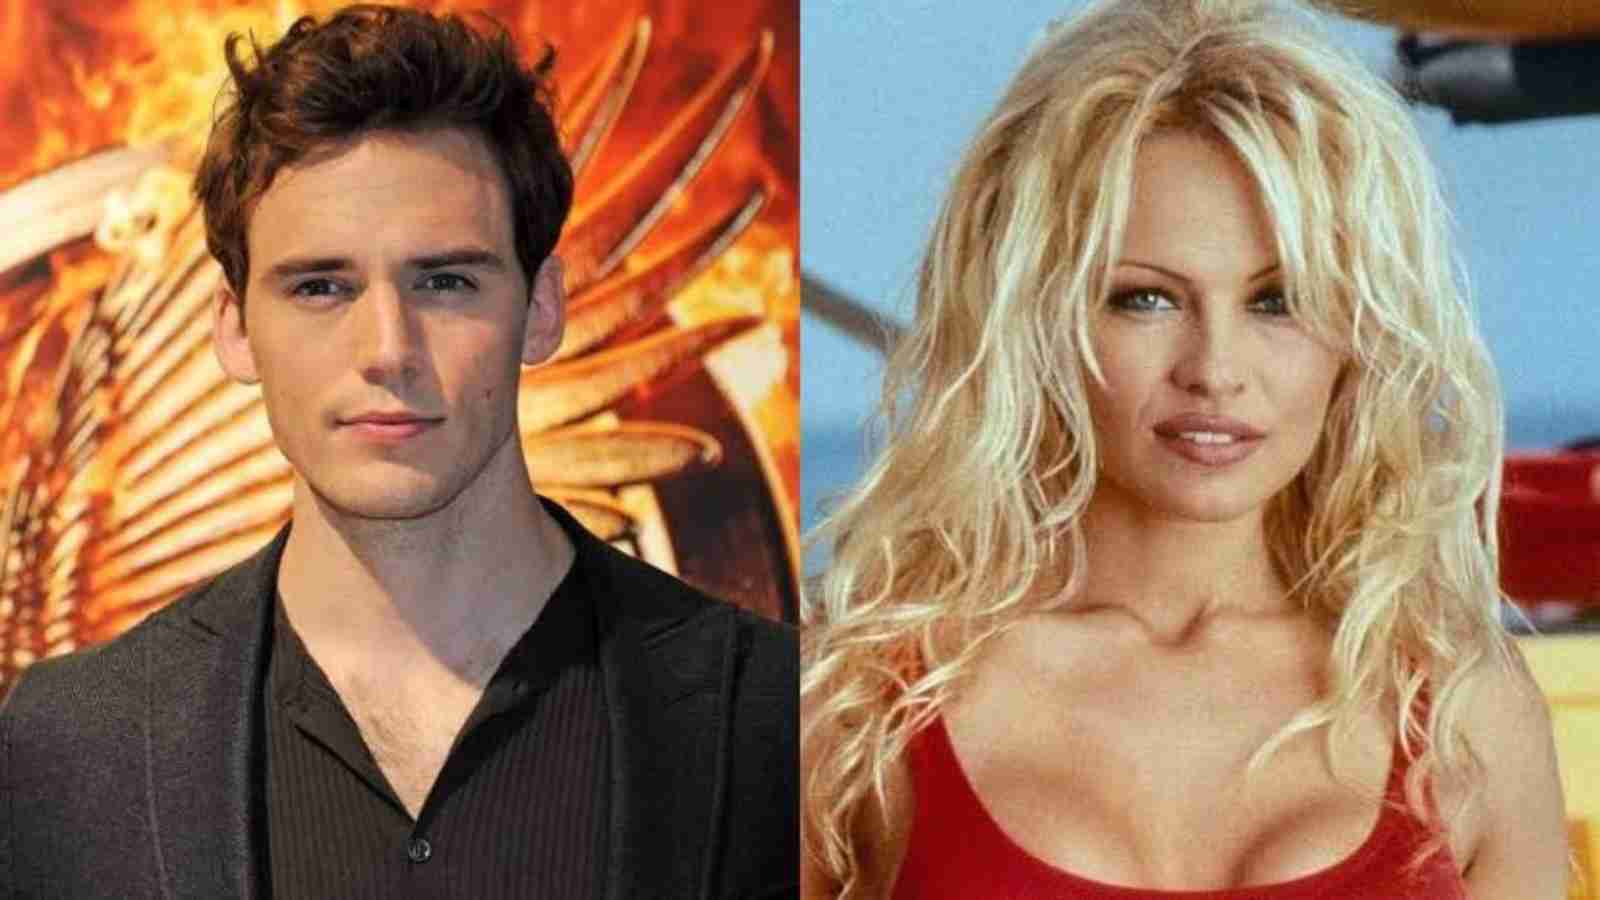 Sam Clafin's celebrity crush was Pamela Anderson